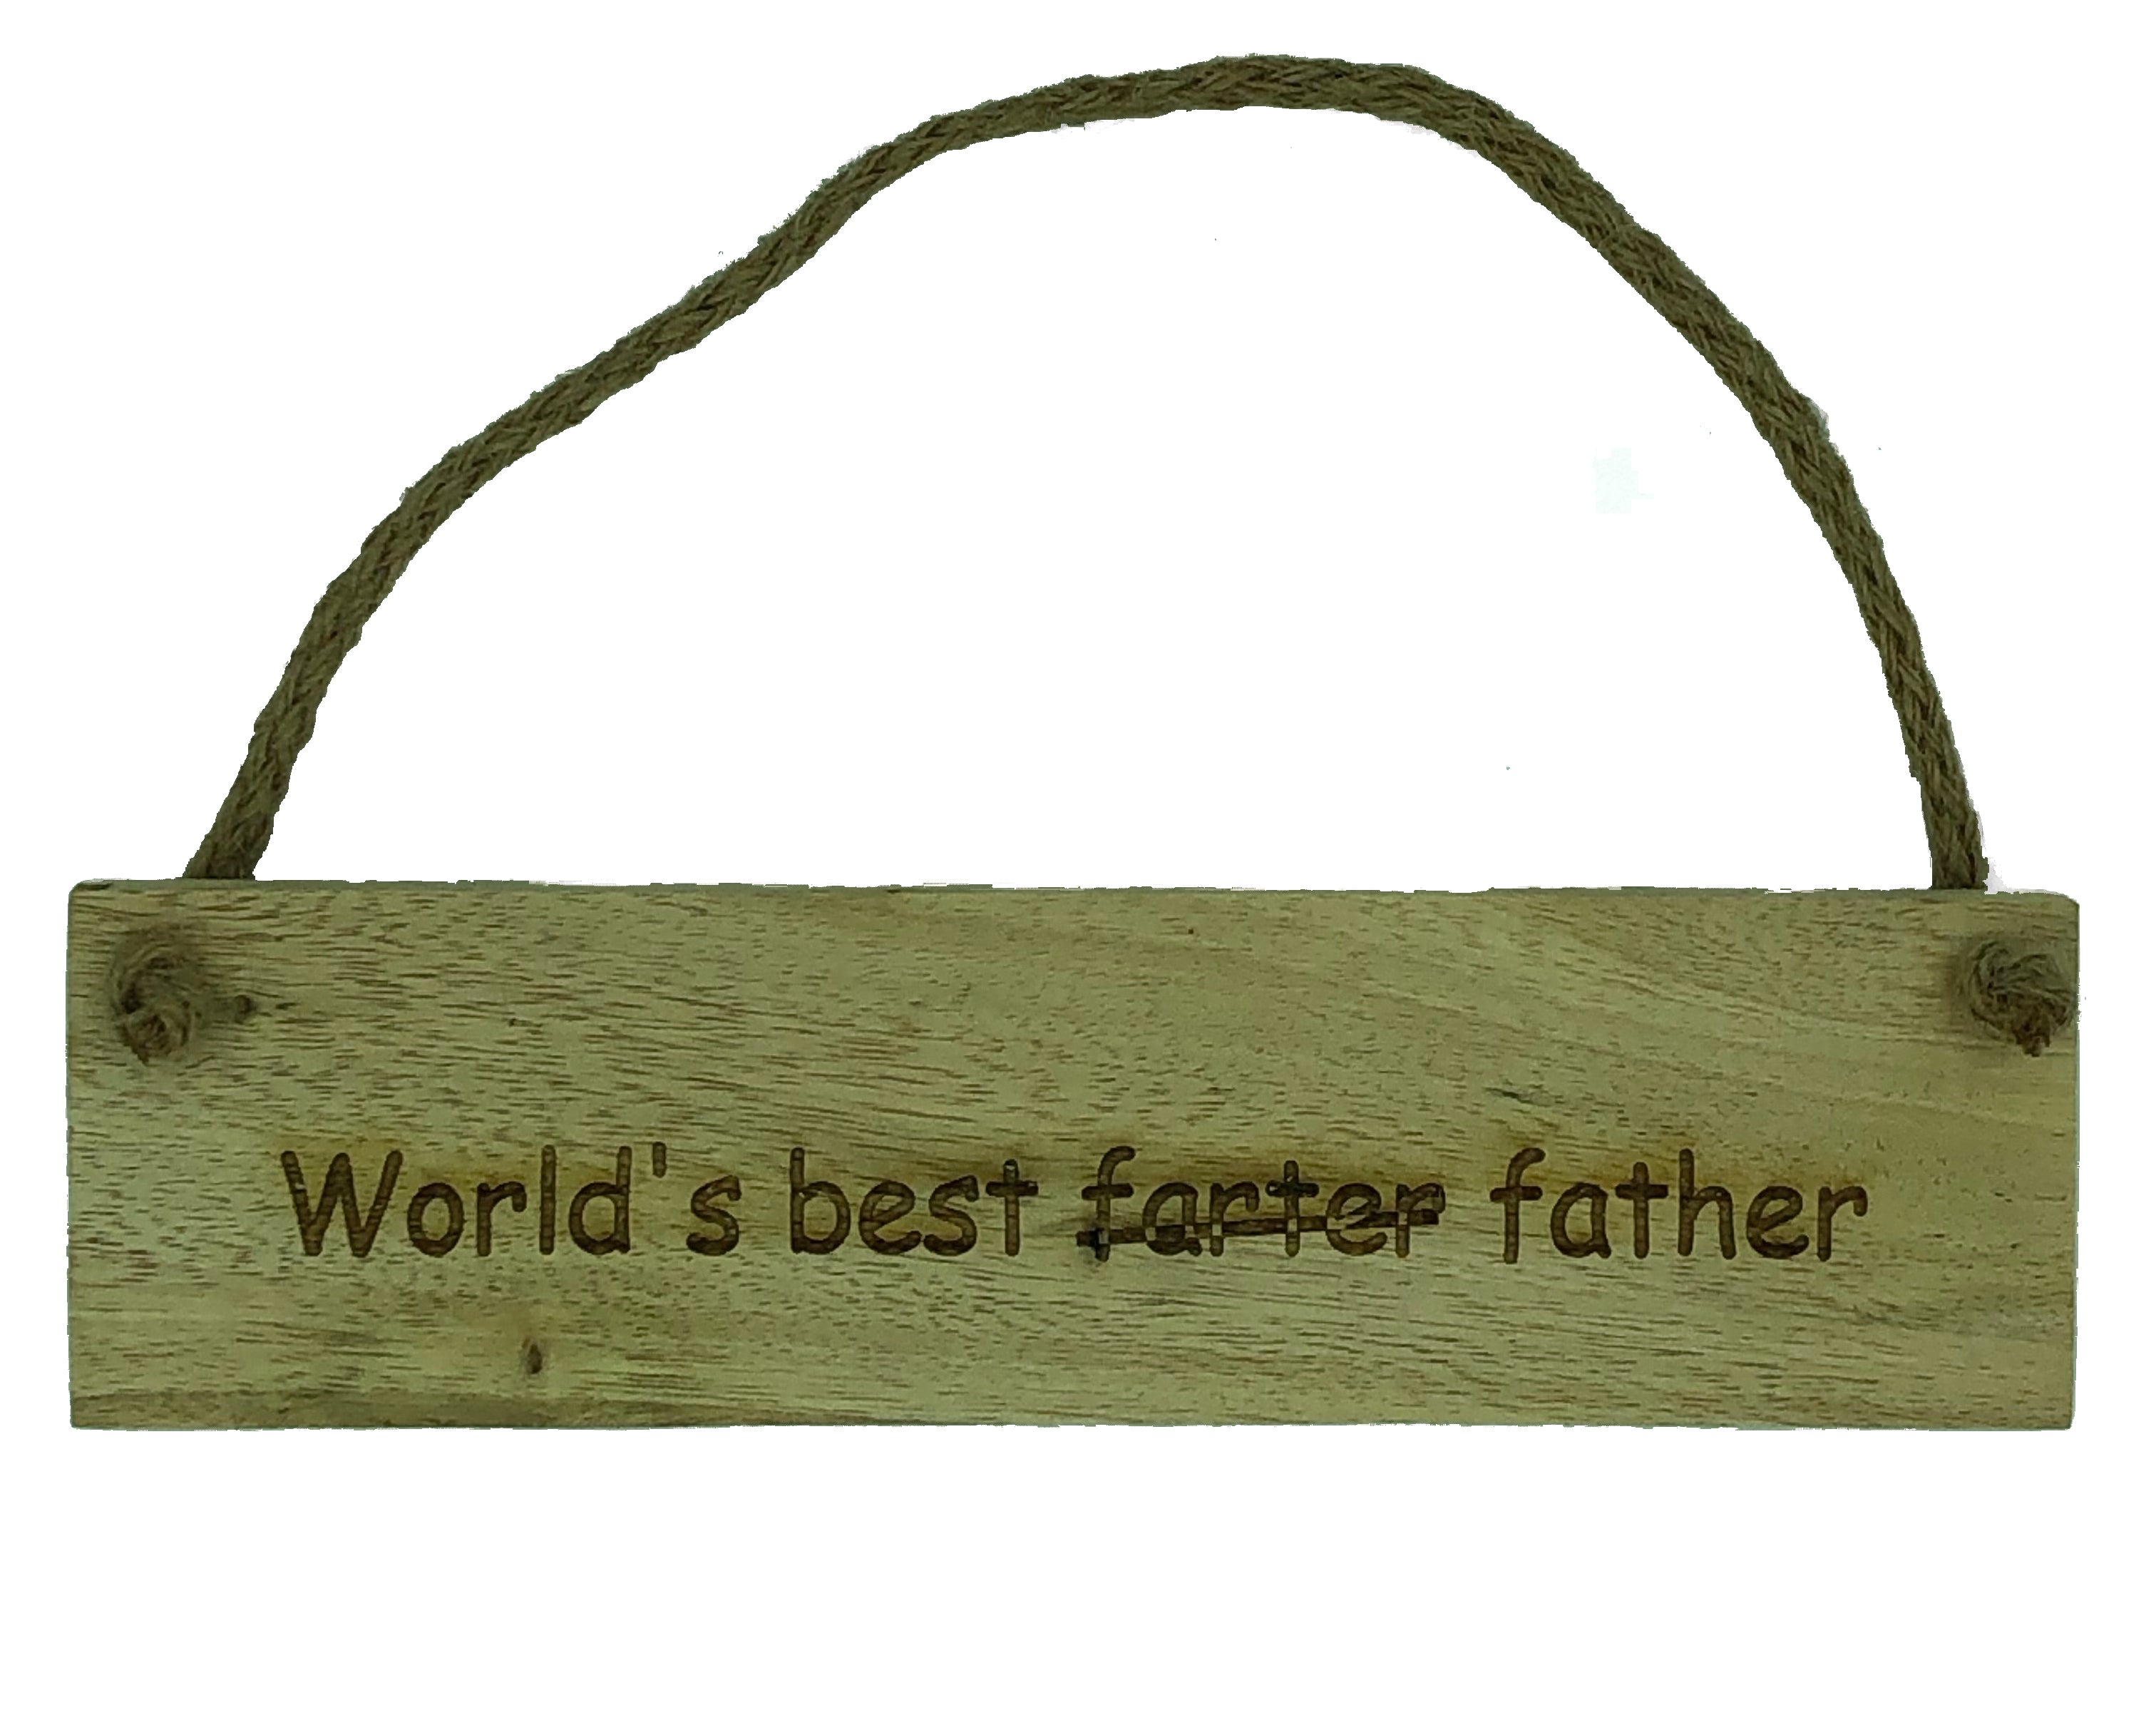 Handmade wooden hanging plaque - worlds best farter father